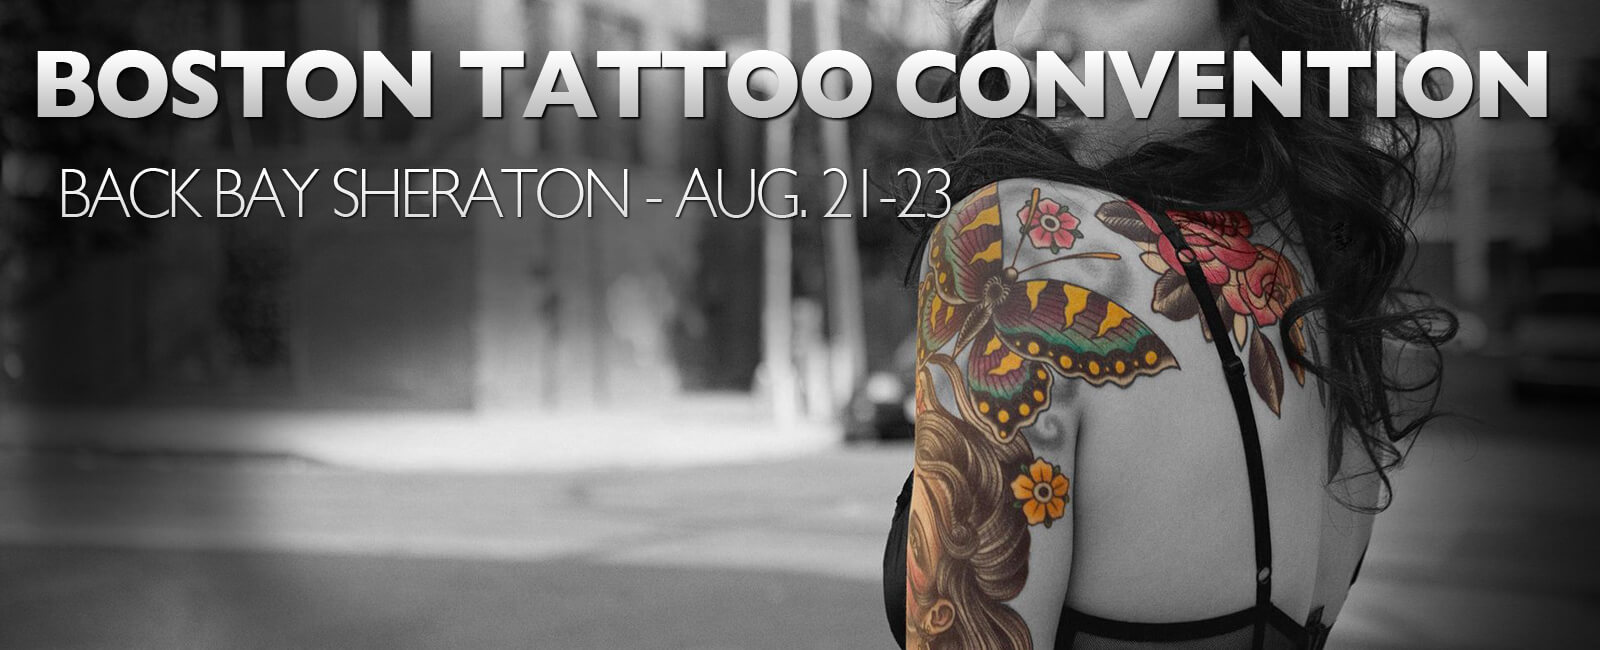 Boston Tattoo Convention August 21-23, 2015 | WeekendPick